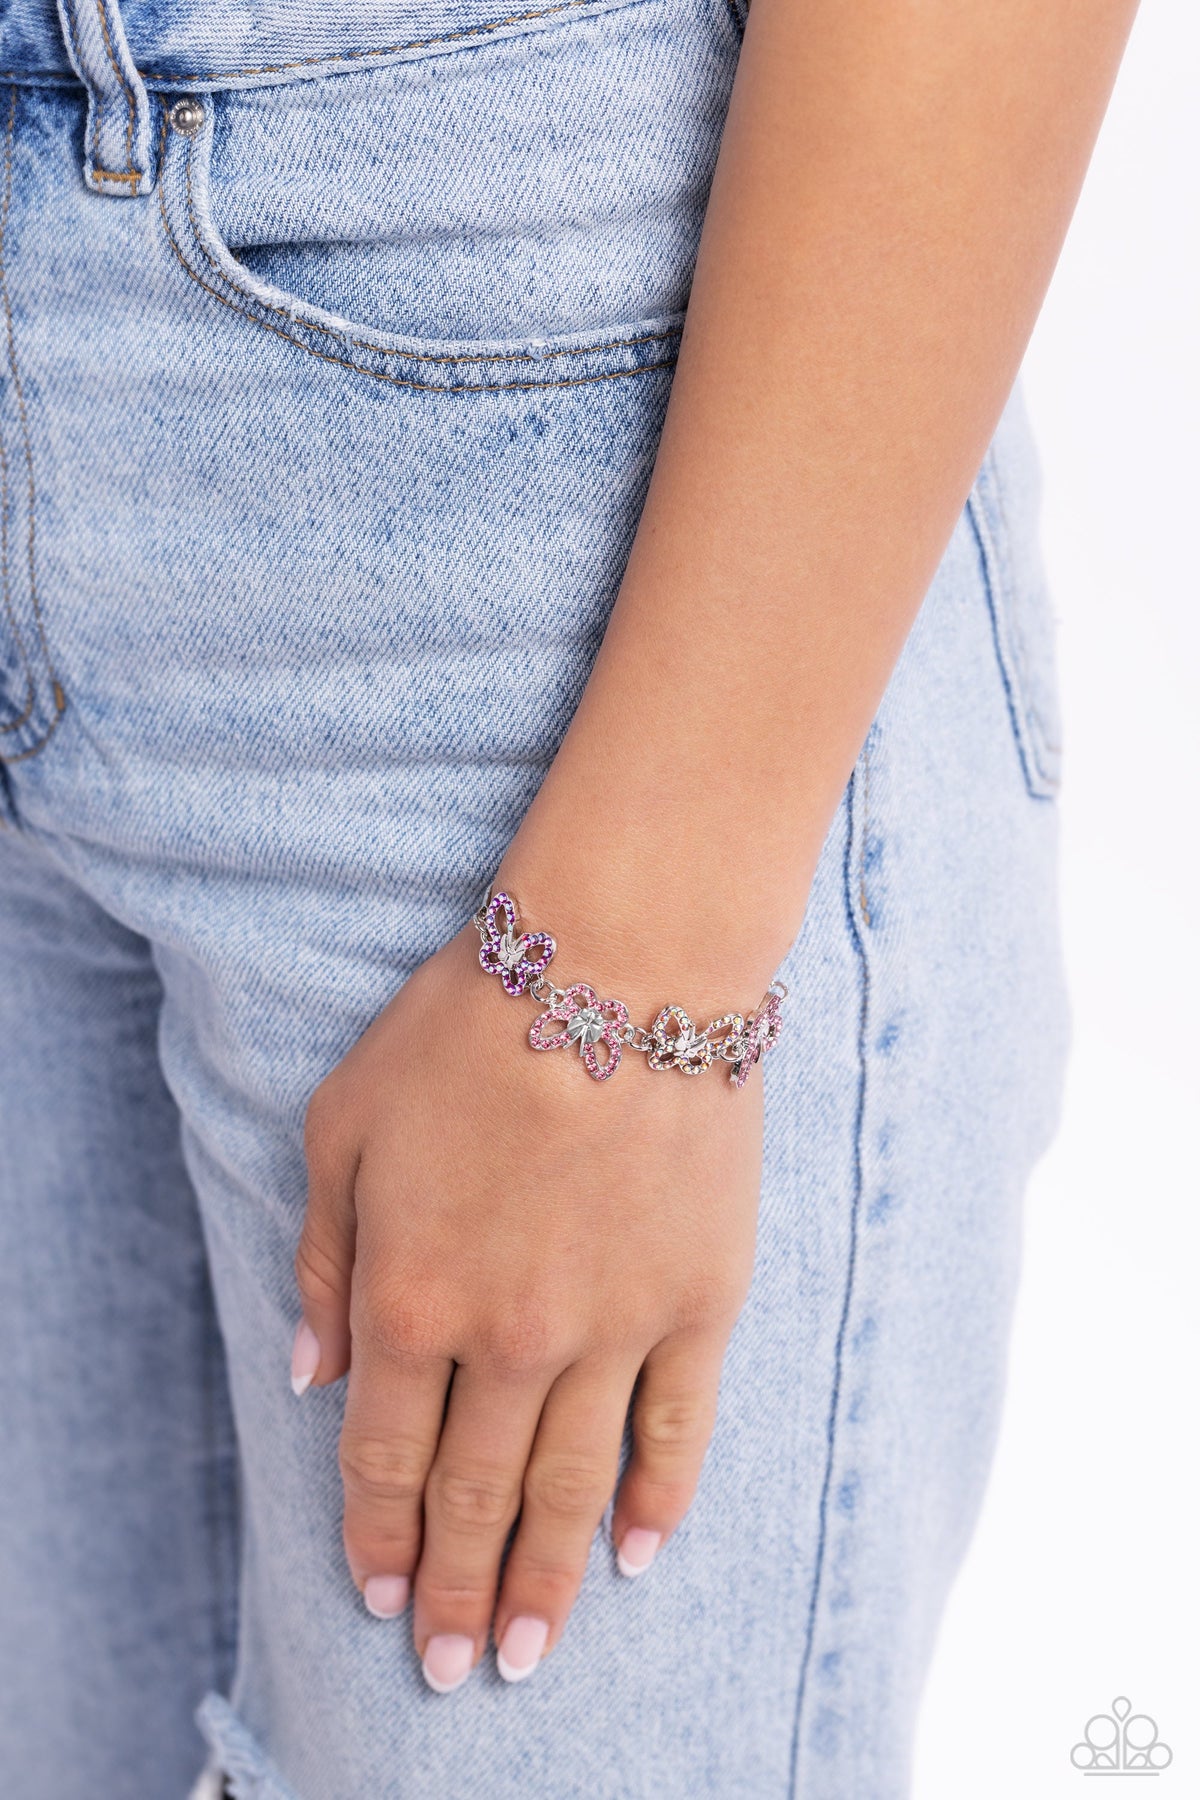 Butterfly Belonging Pink &amp; Iridescent Rhinestone Bracelet - Paparazzi Accessories-on model - CarasShop.com - $5 Jewelry by Cara Jewels